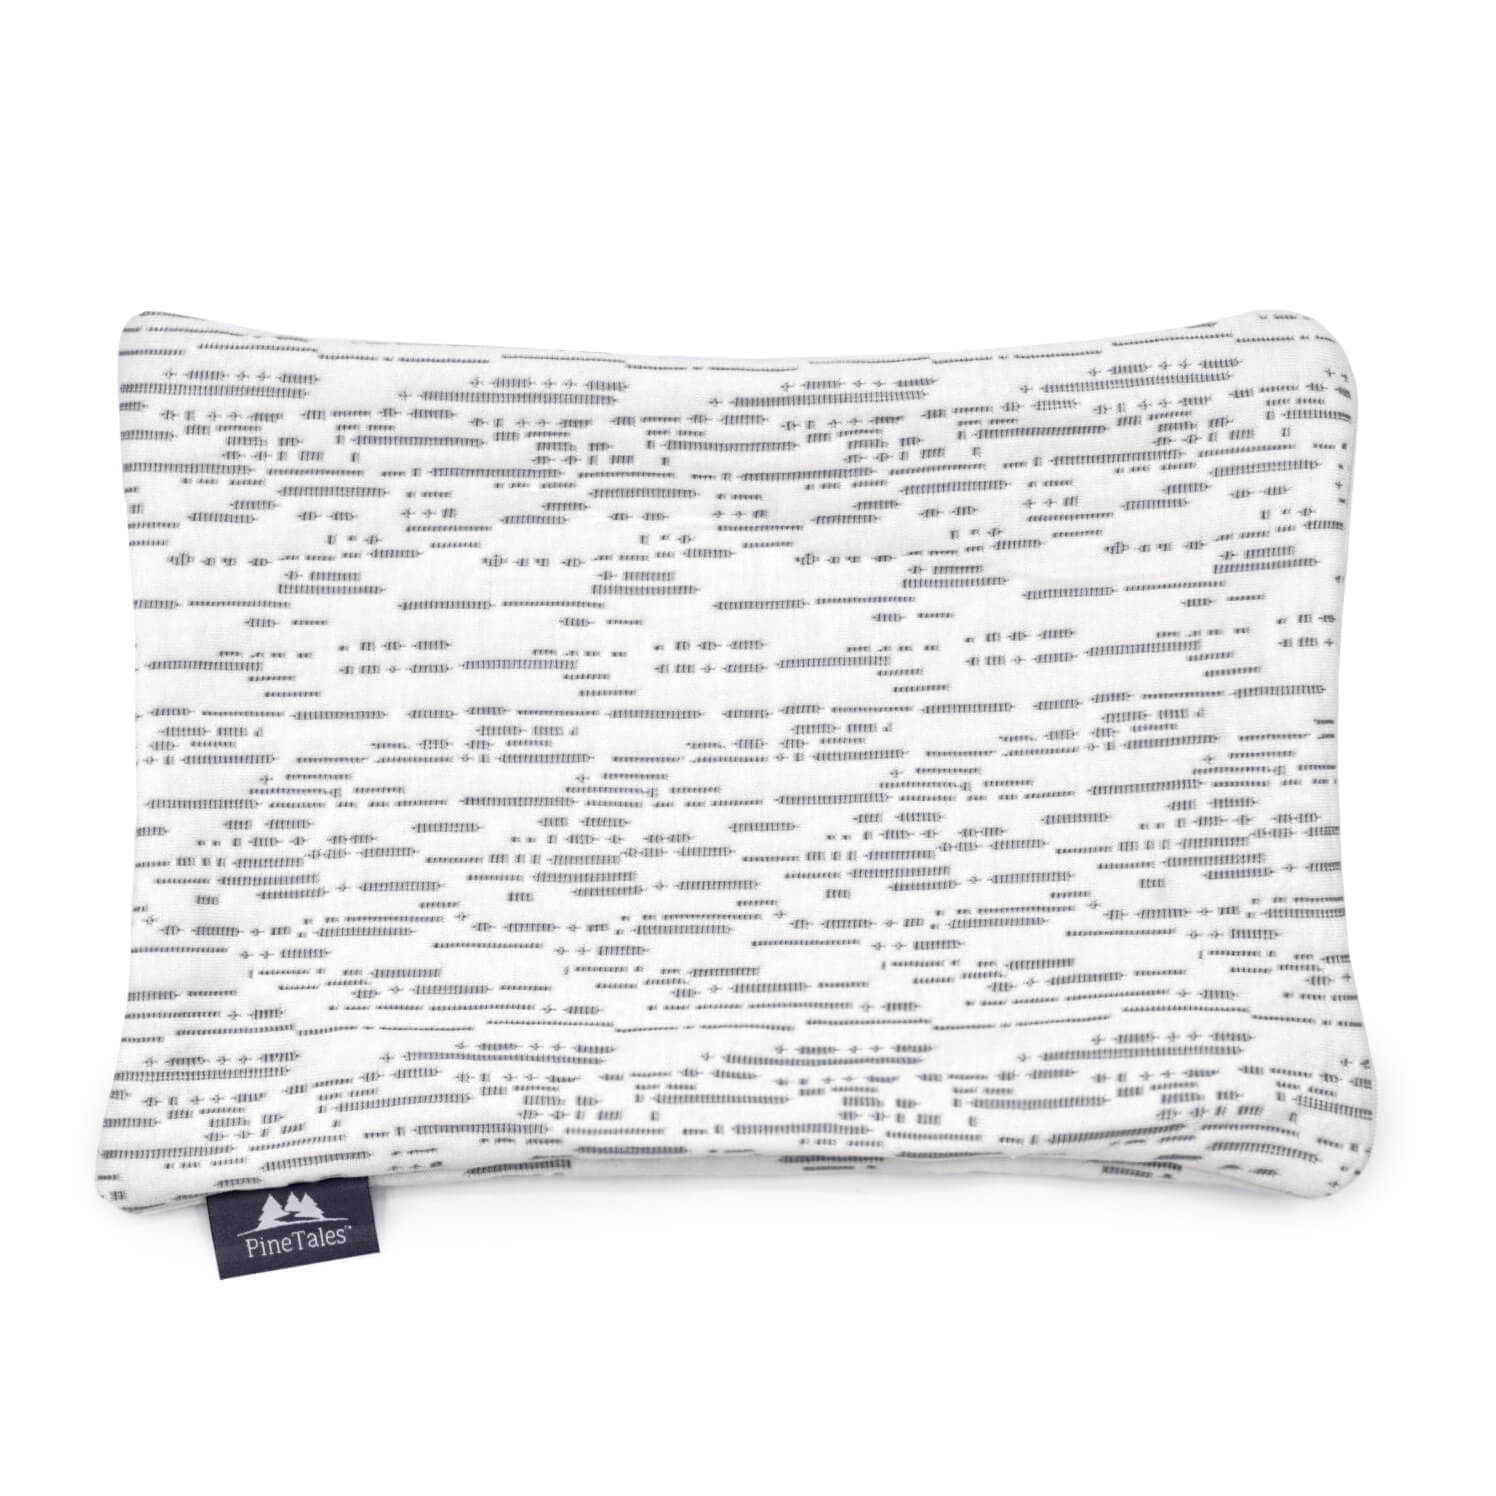 Pillowcase for Buckwheat Travel Pillow